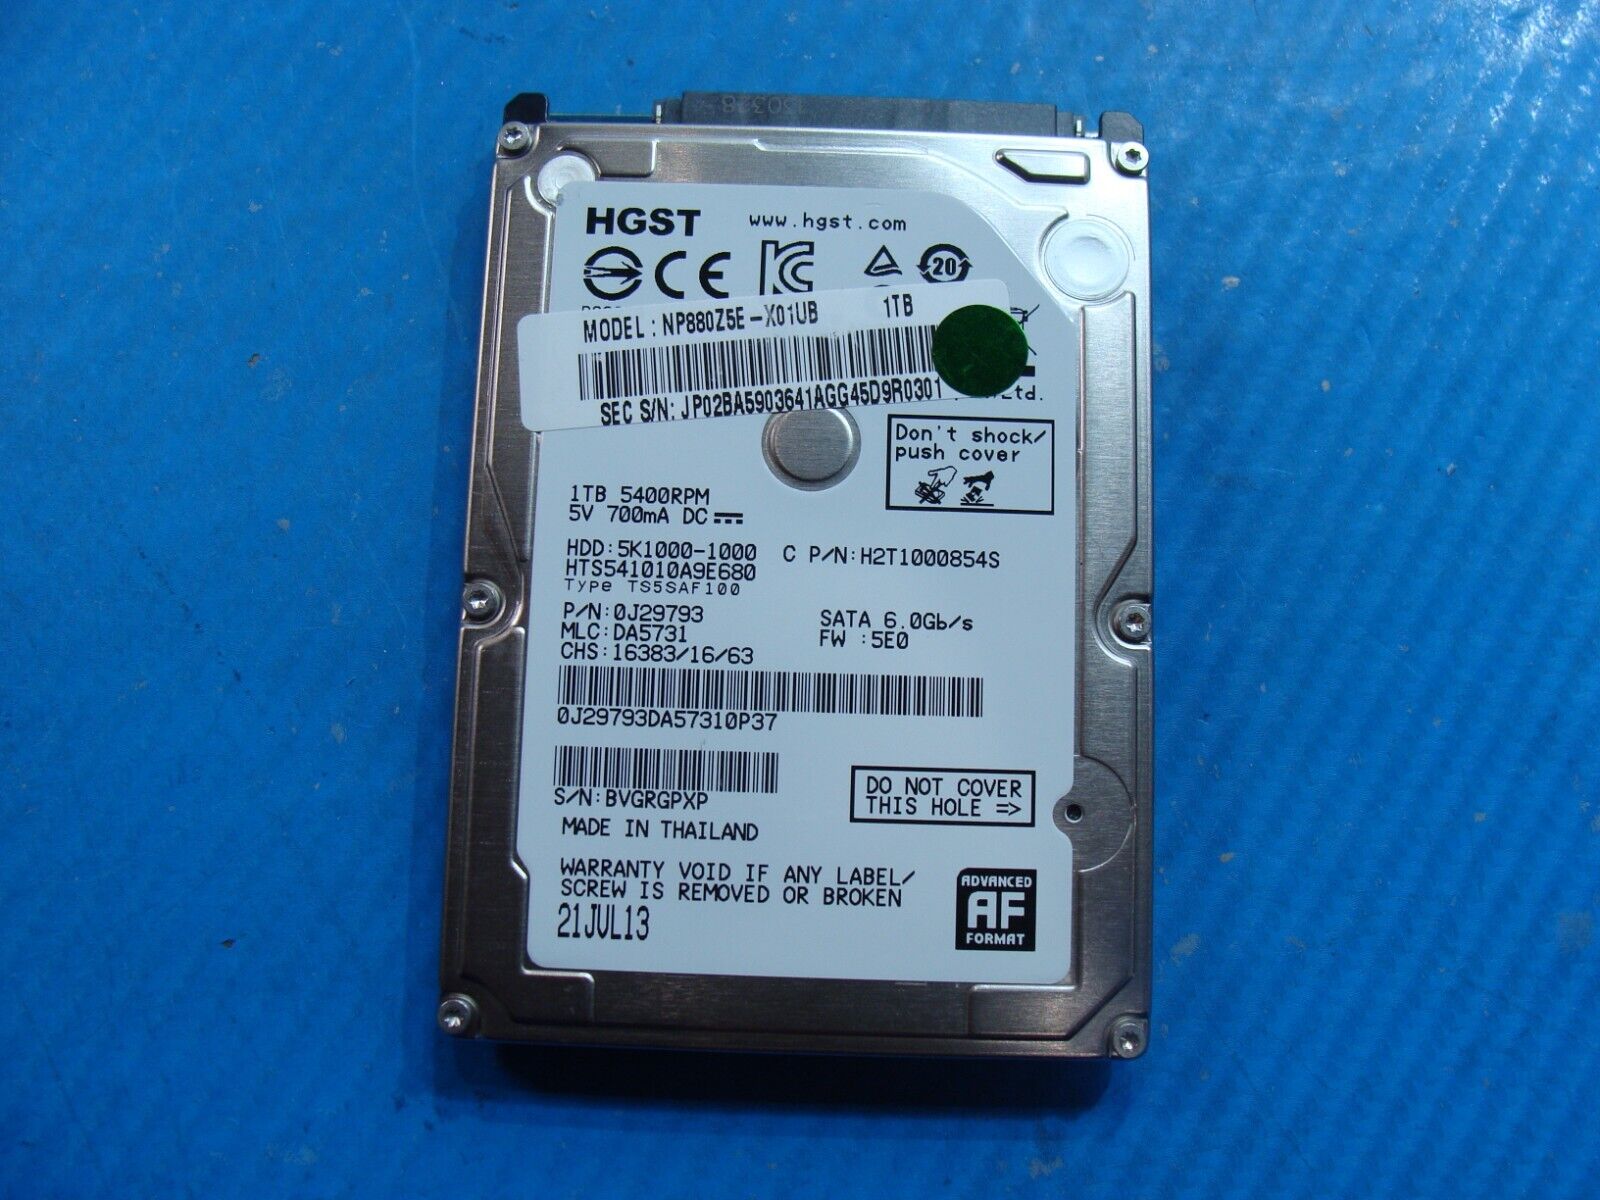 Samsung NP880Z5E-X01UB HGST 1TB SATA 2.5 HDD Hard Drive HTS541010A9E680